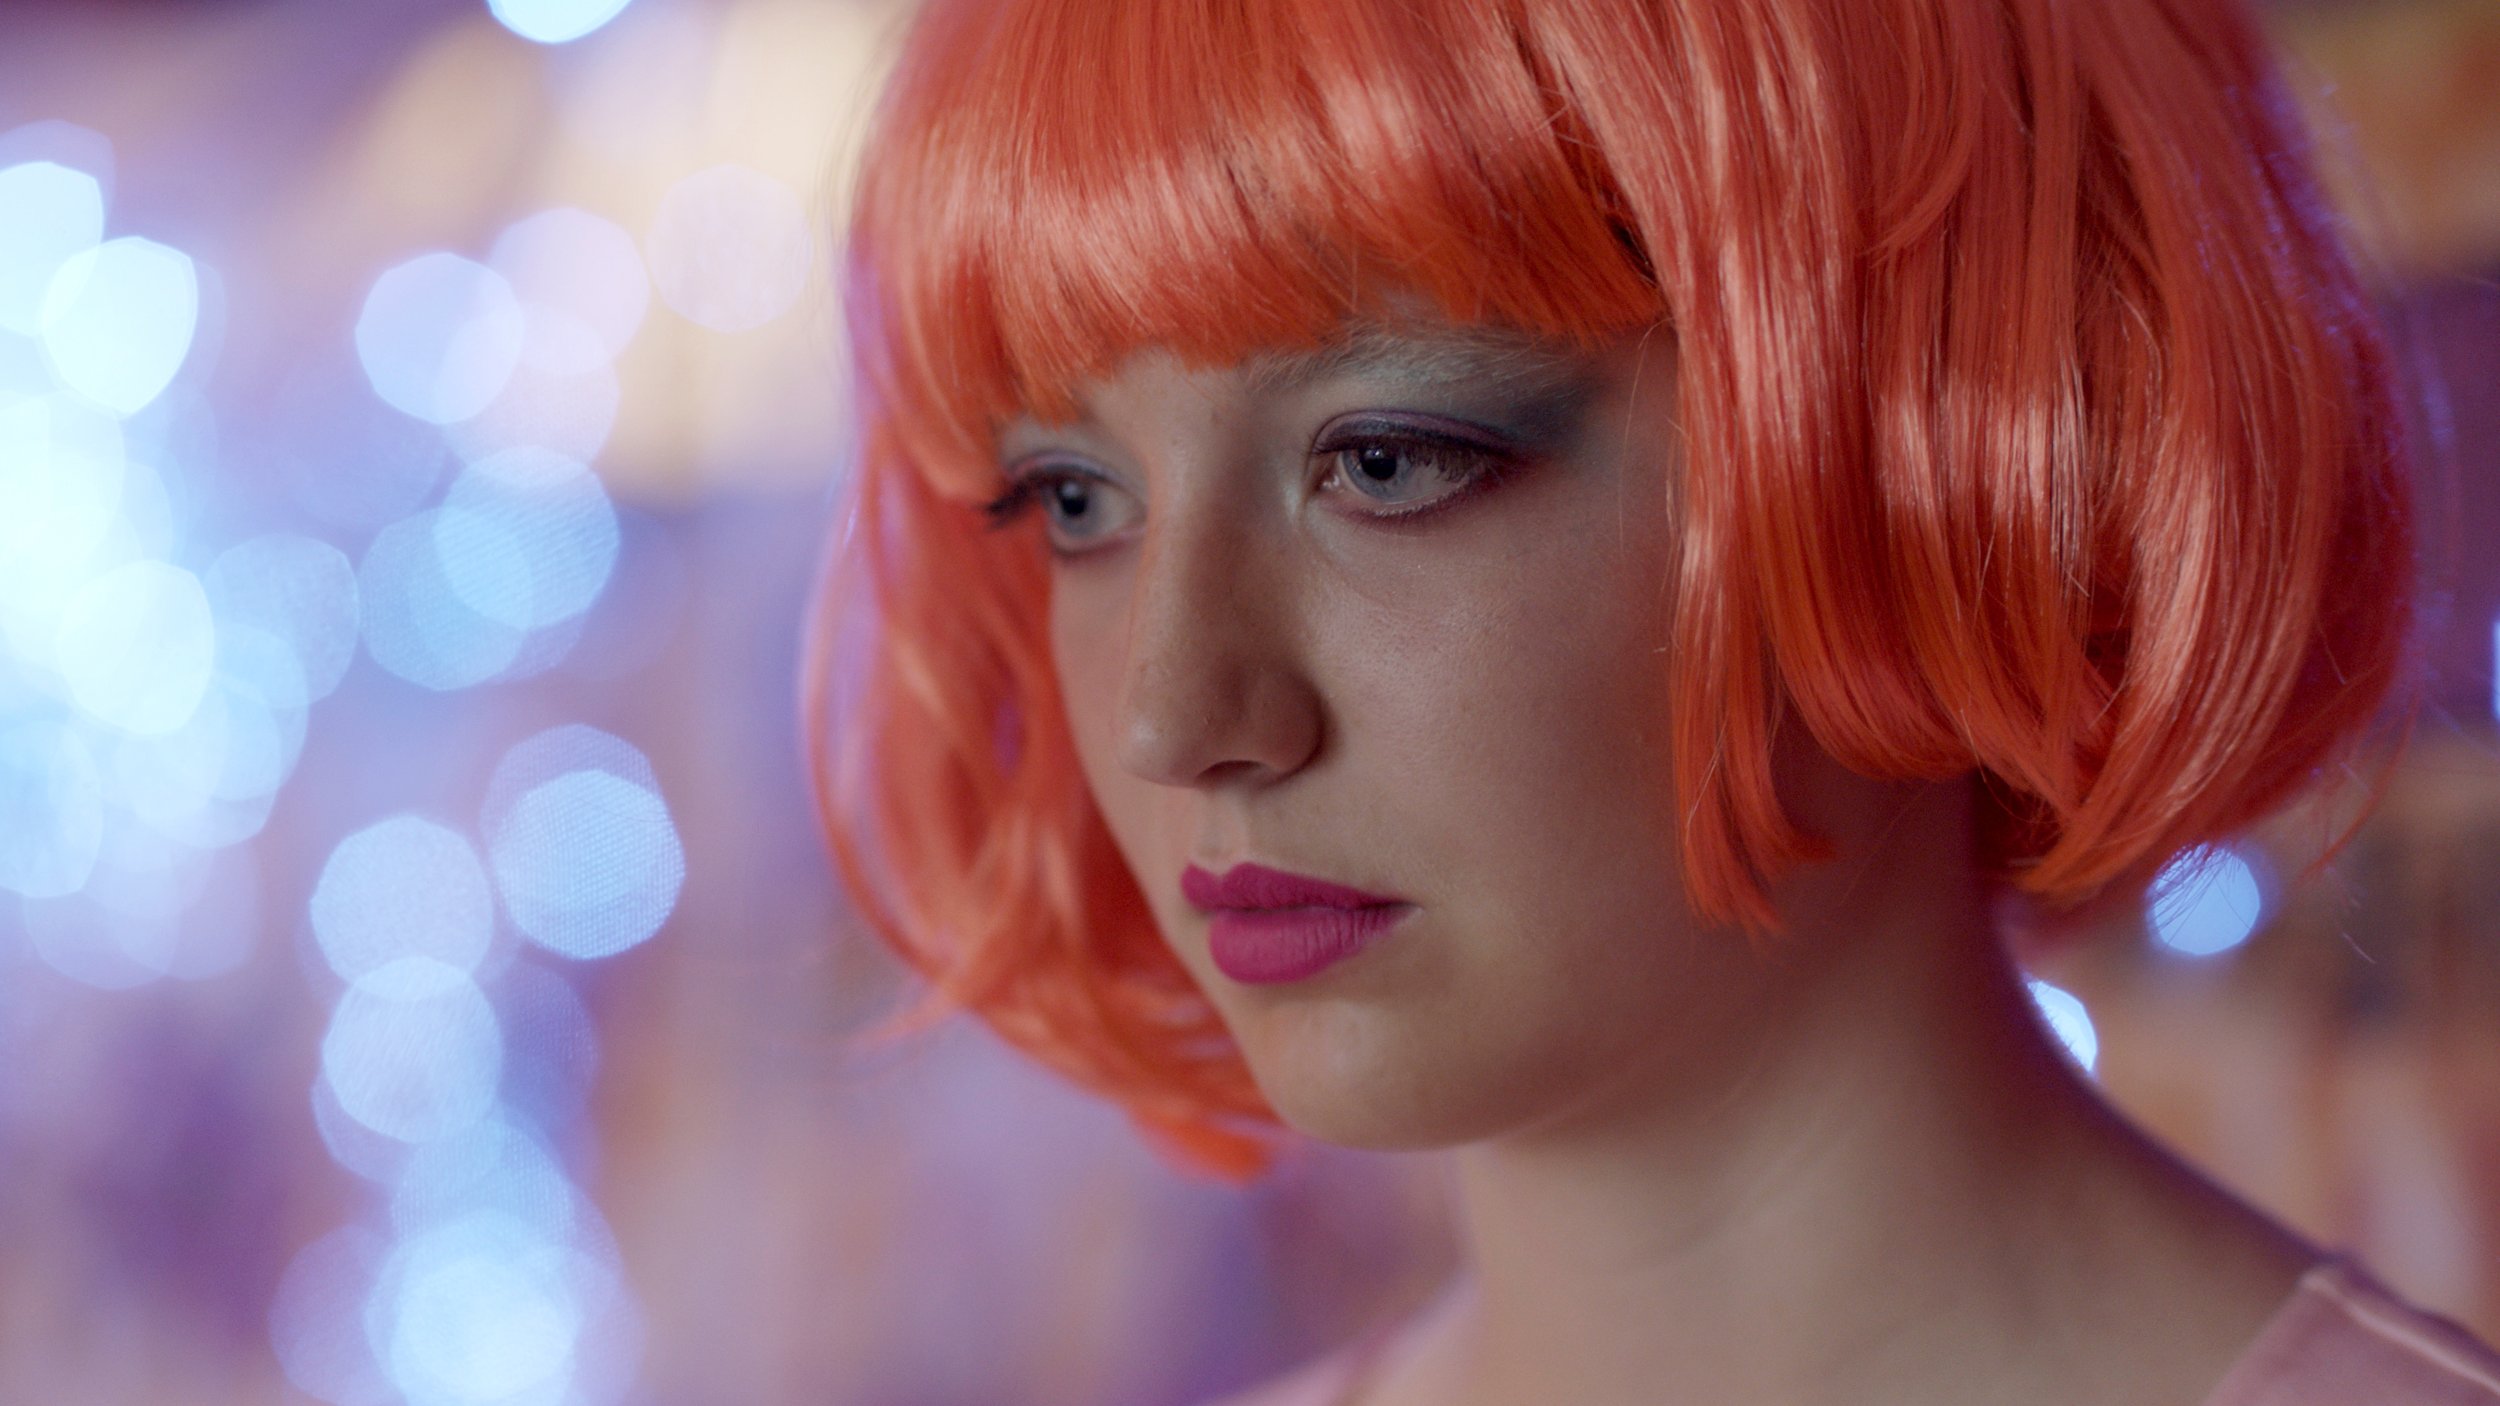 TIGER WITHIN - Margot Josefsohn as Casey in red wig. Photo Courtesy of Menemsha Films (1).jpg